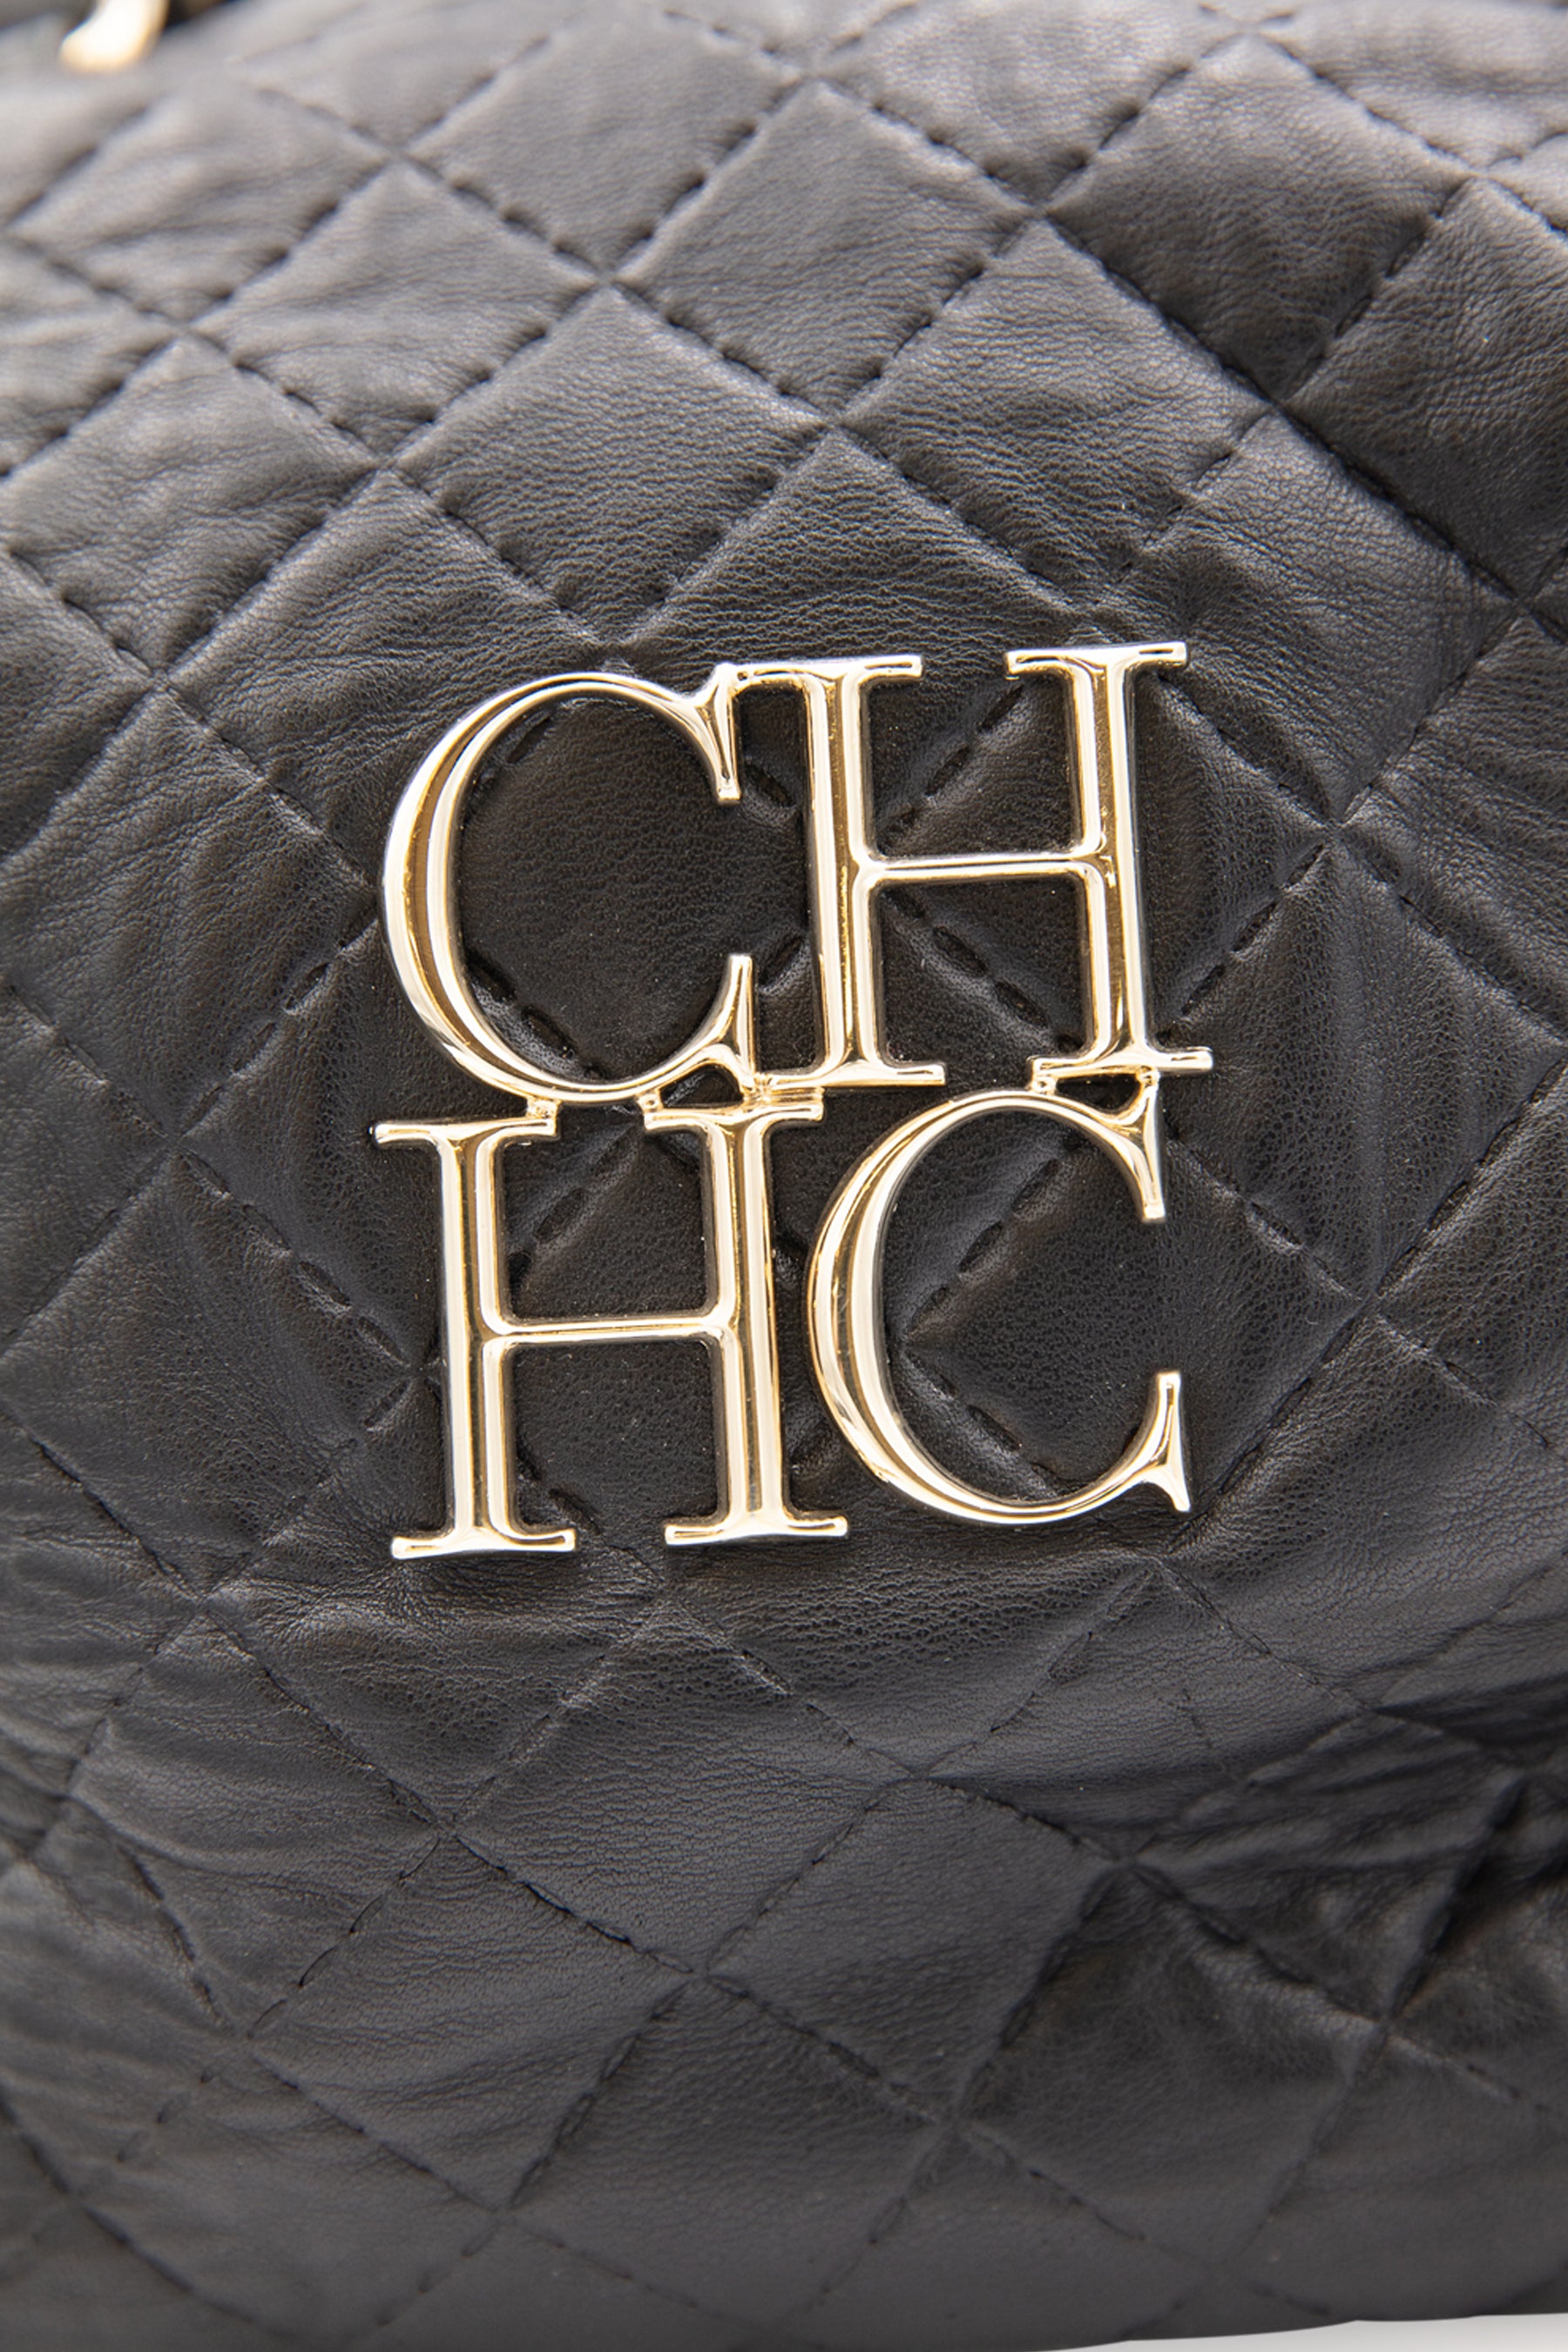 CAROLINA HERRERA 'JEWEL' Black QUILTED LEATHER Chain Clutch Bag CH  HandBag NWT